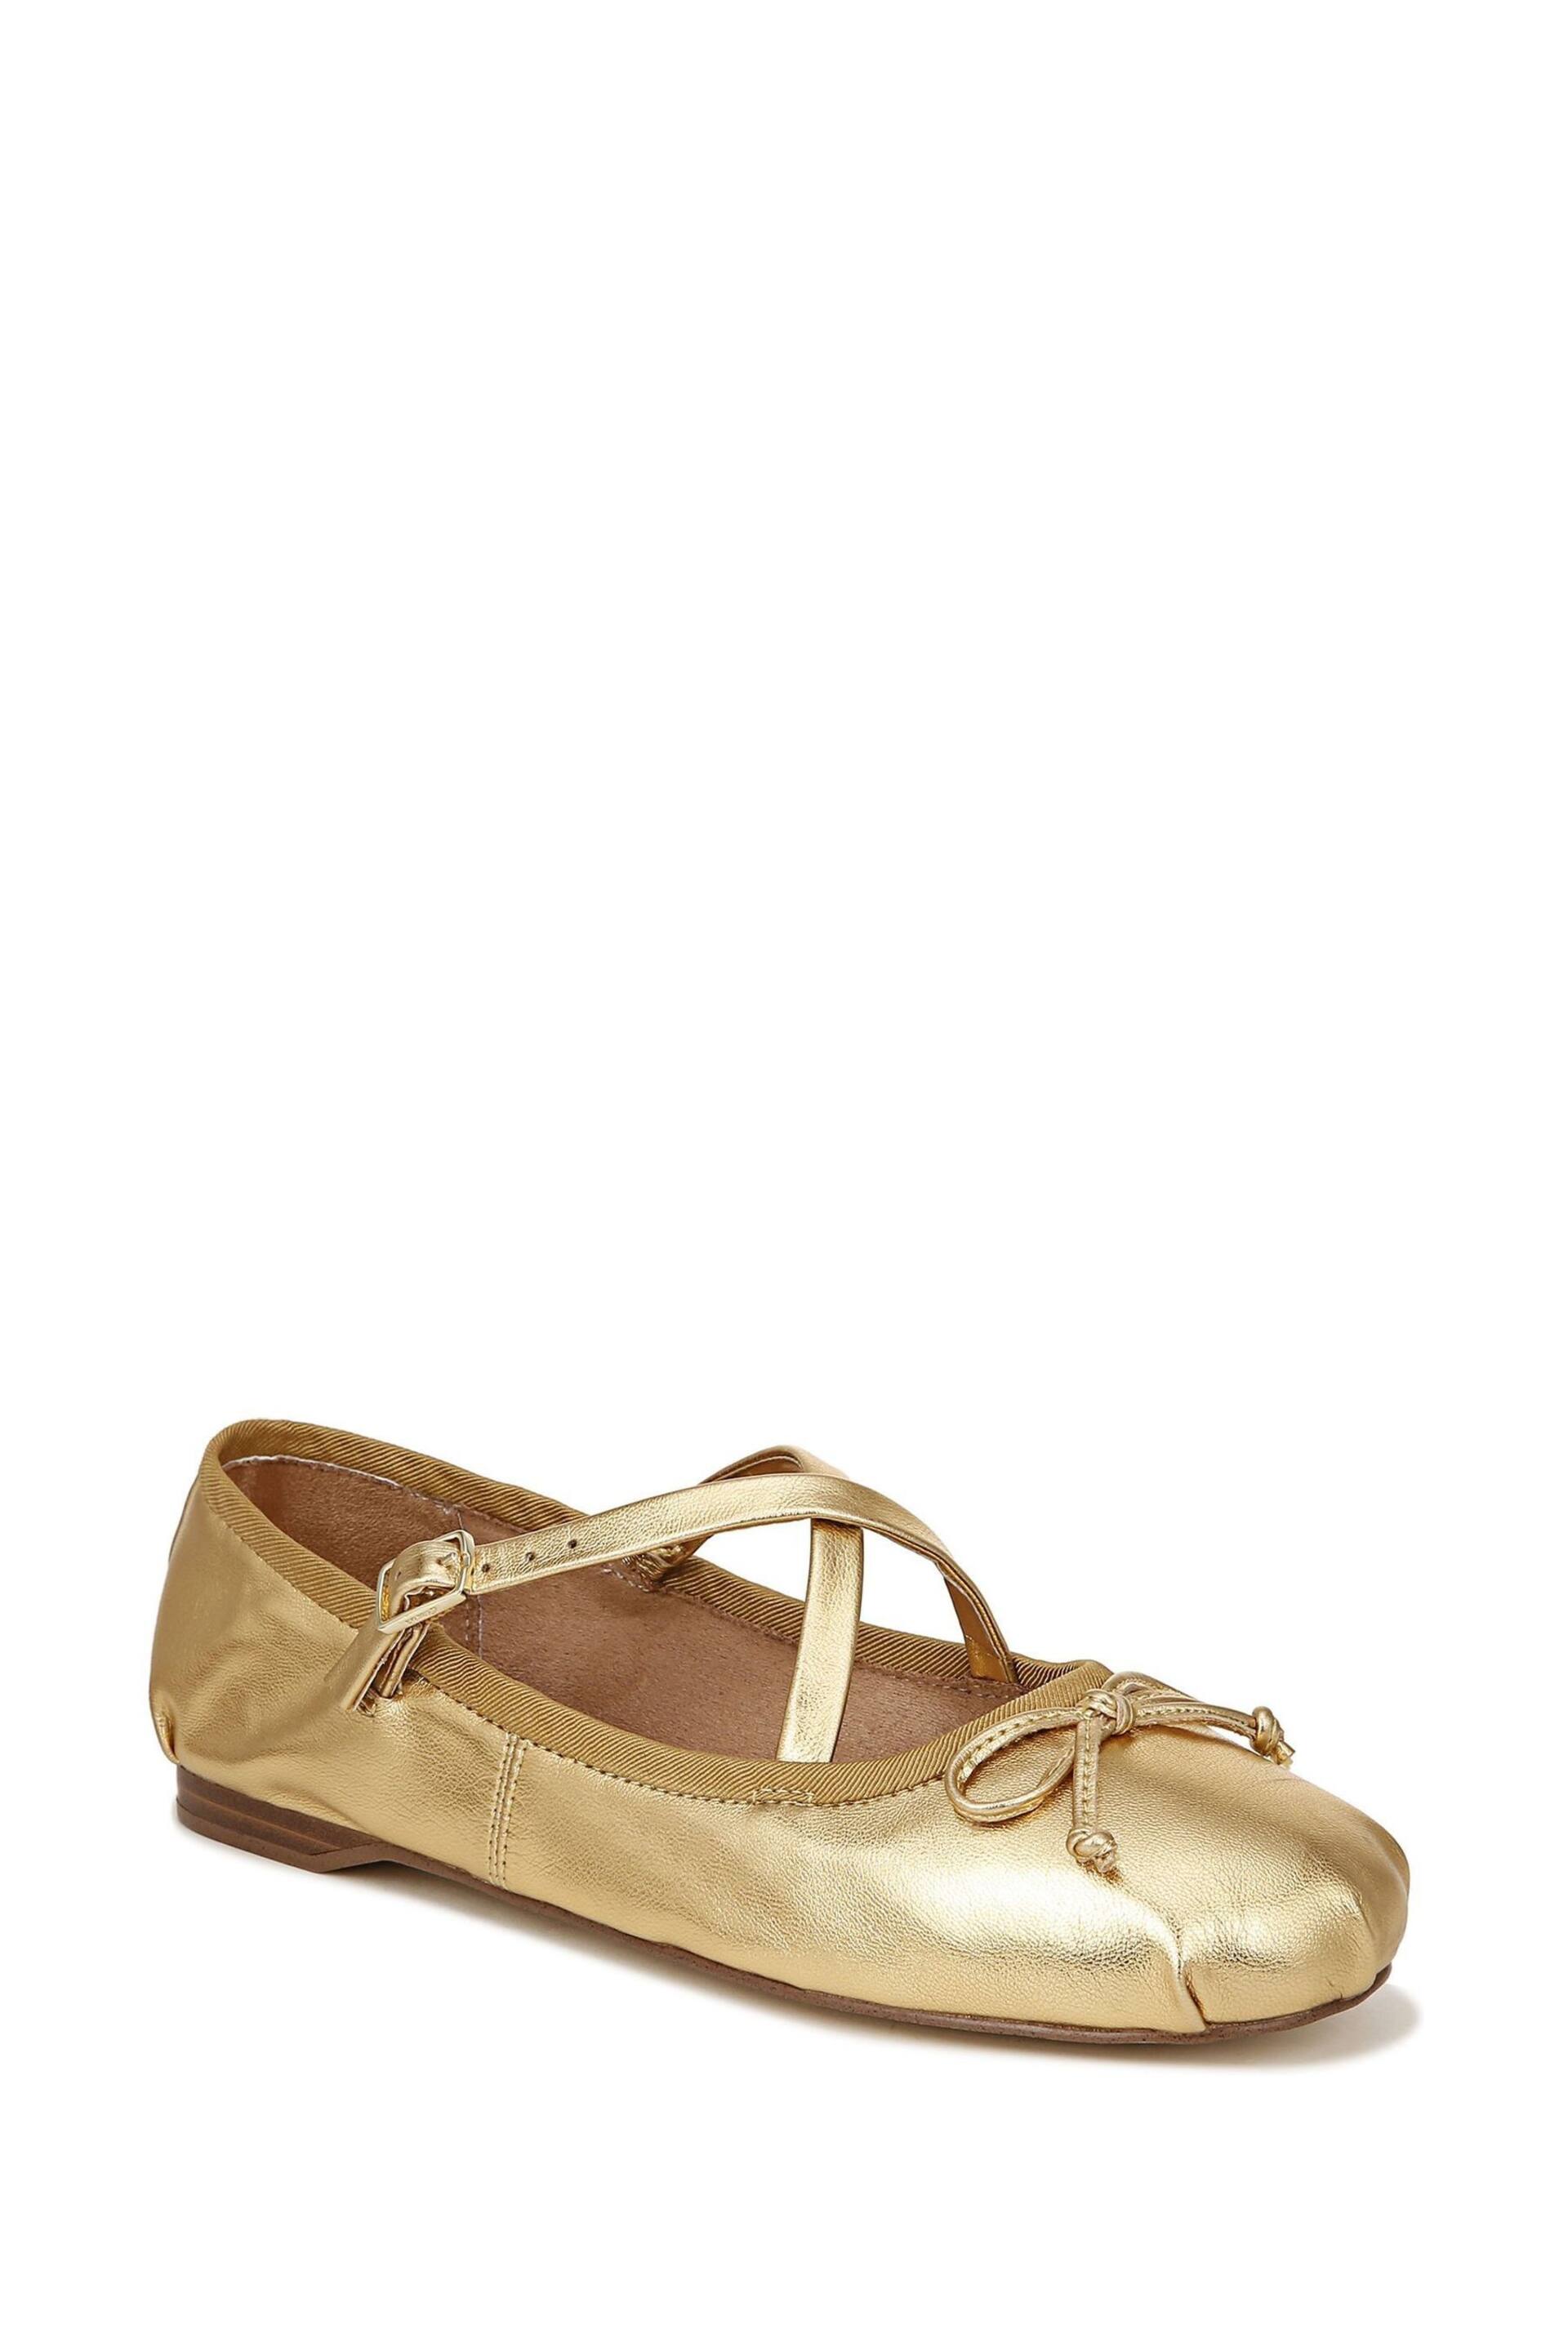 Circus NY Gold Zuri Ballerina Shoes - Image 3 of 7